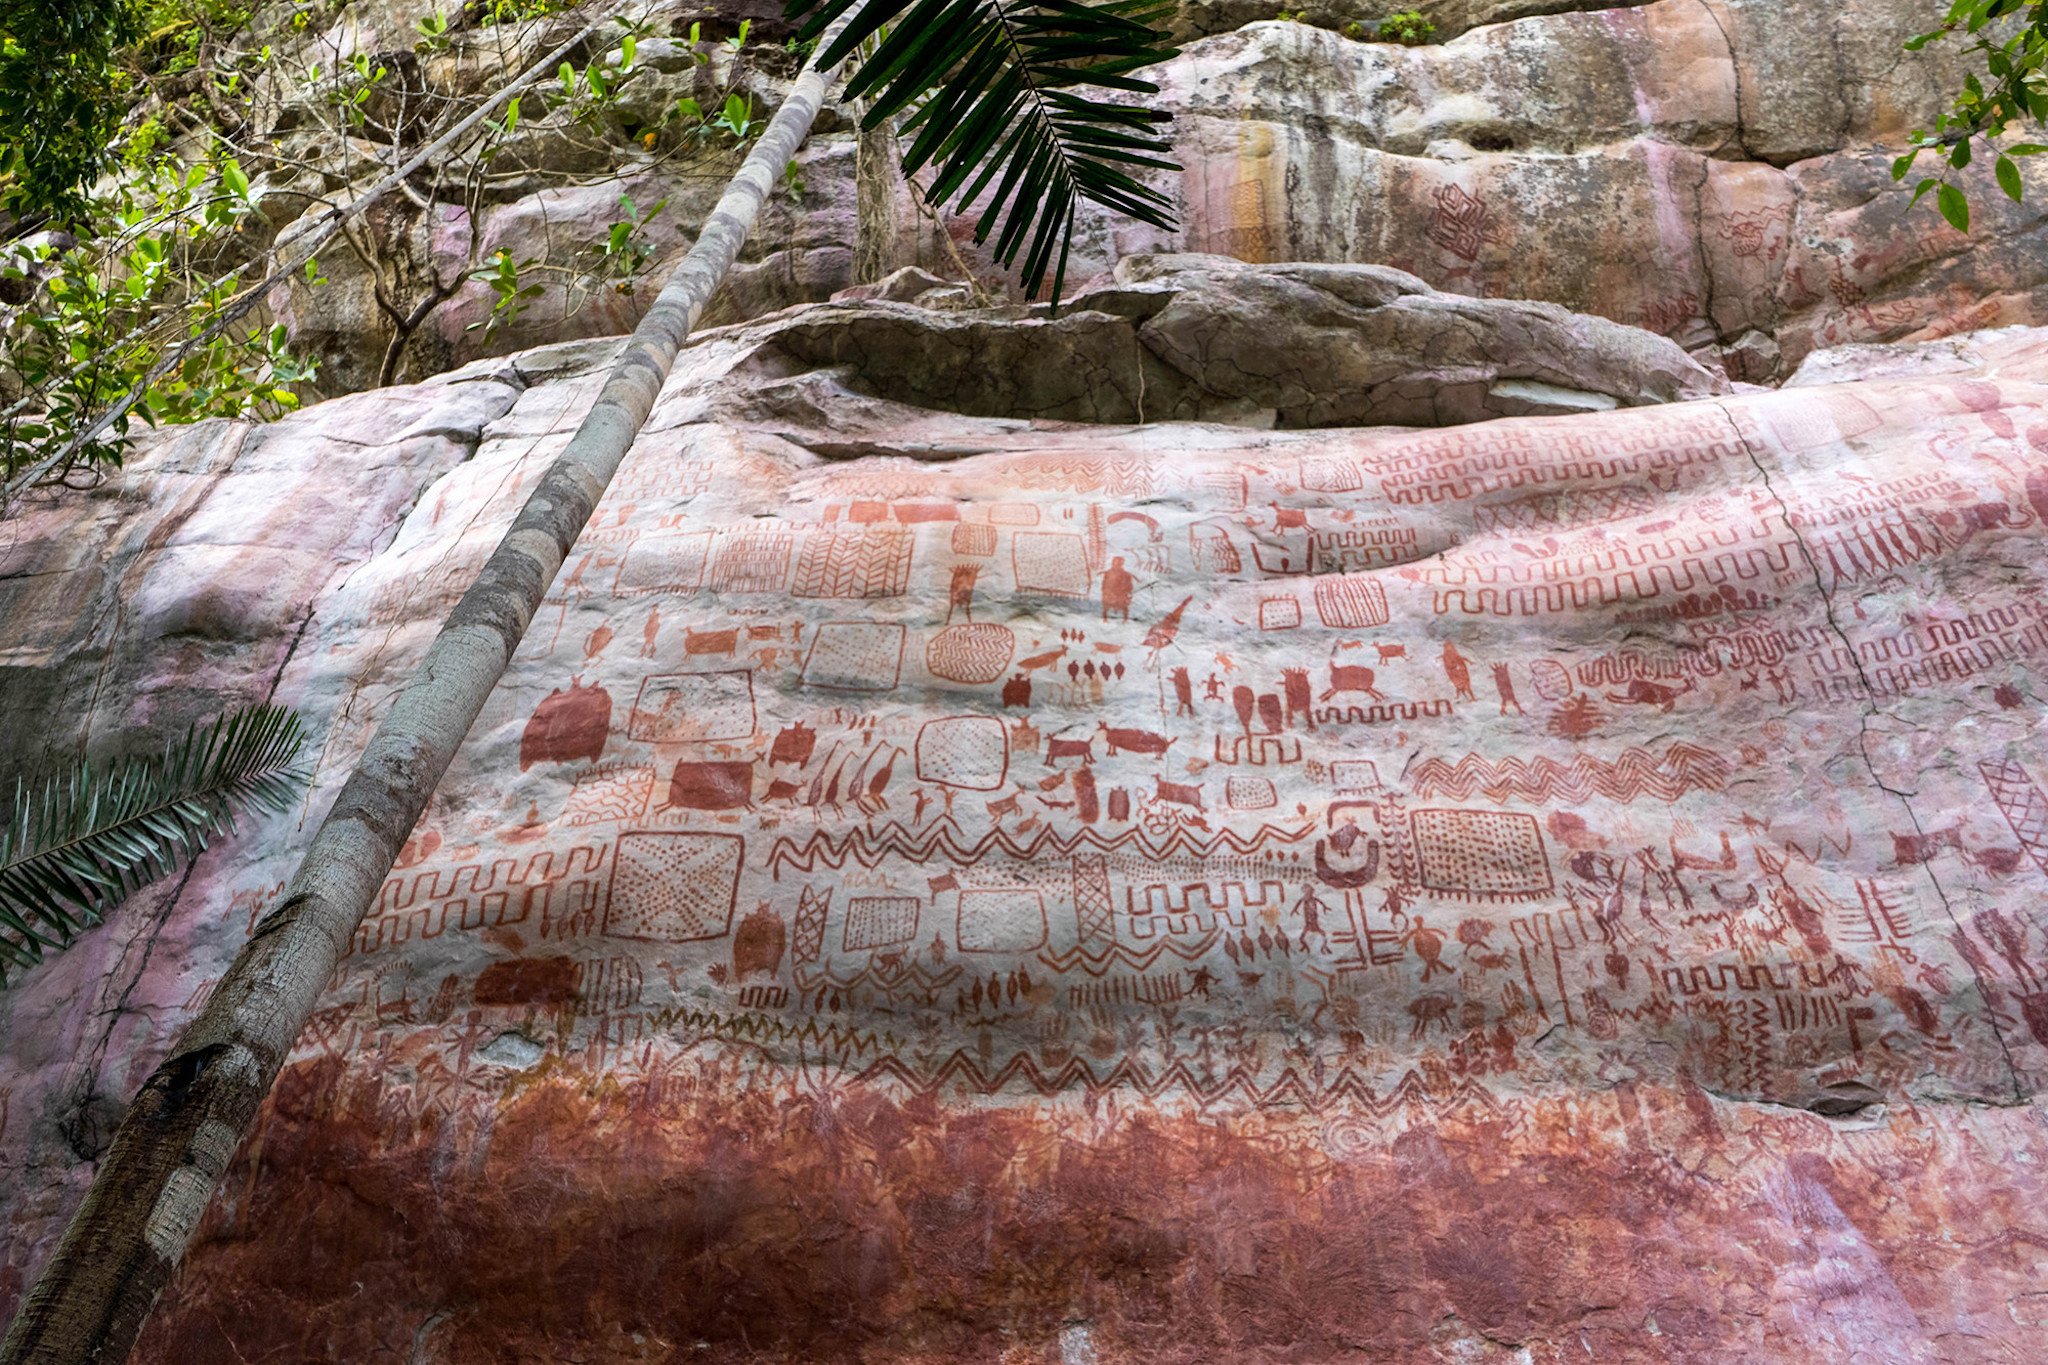 Temukan puluhan ribu lukisan batu di Amazon yang berusia 12.500 tahun